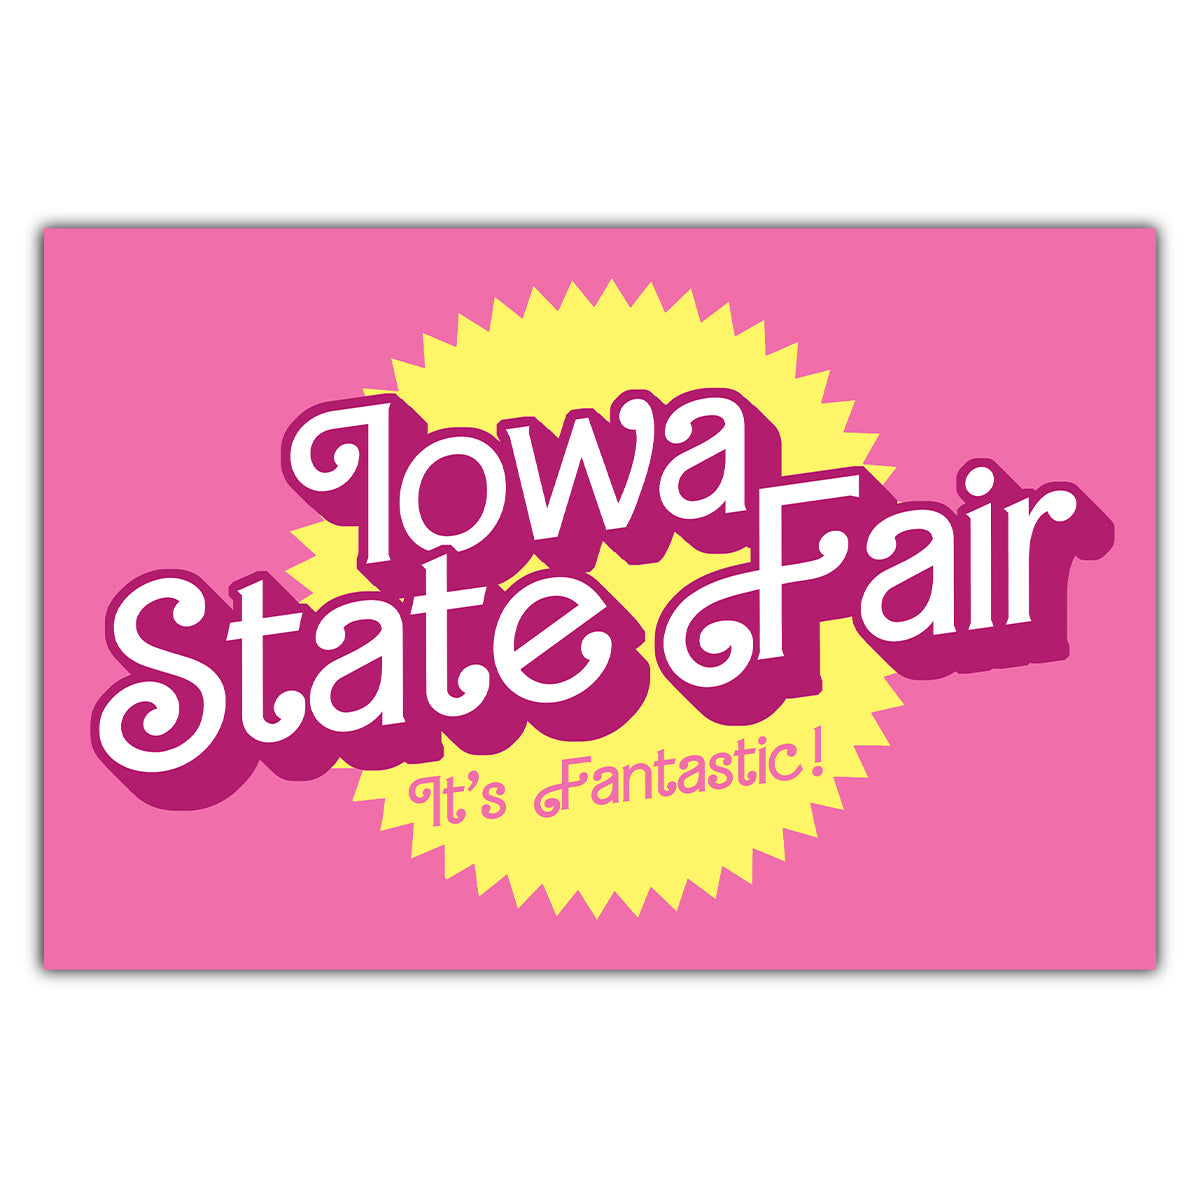 Iowa State Fair It's Fantastic Postcard